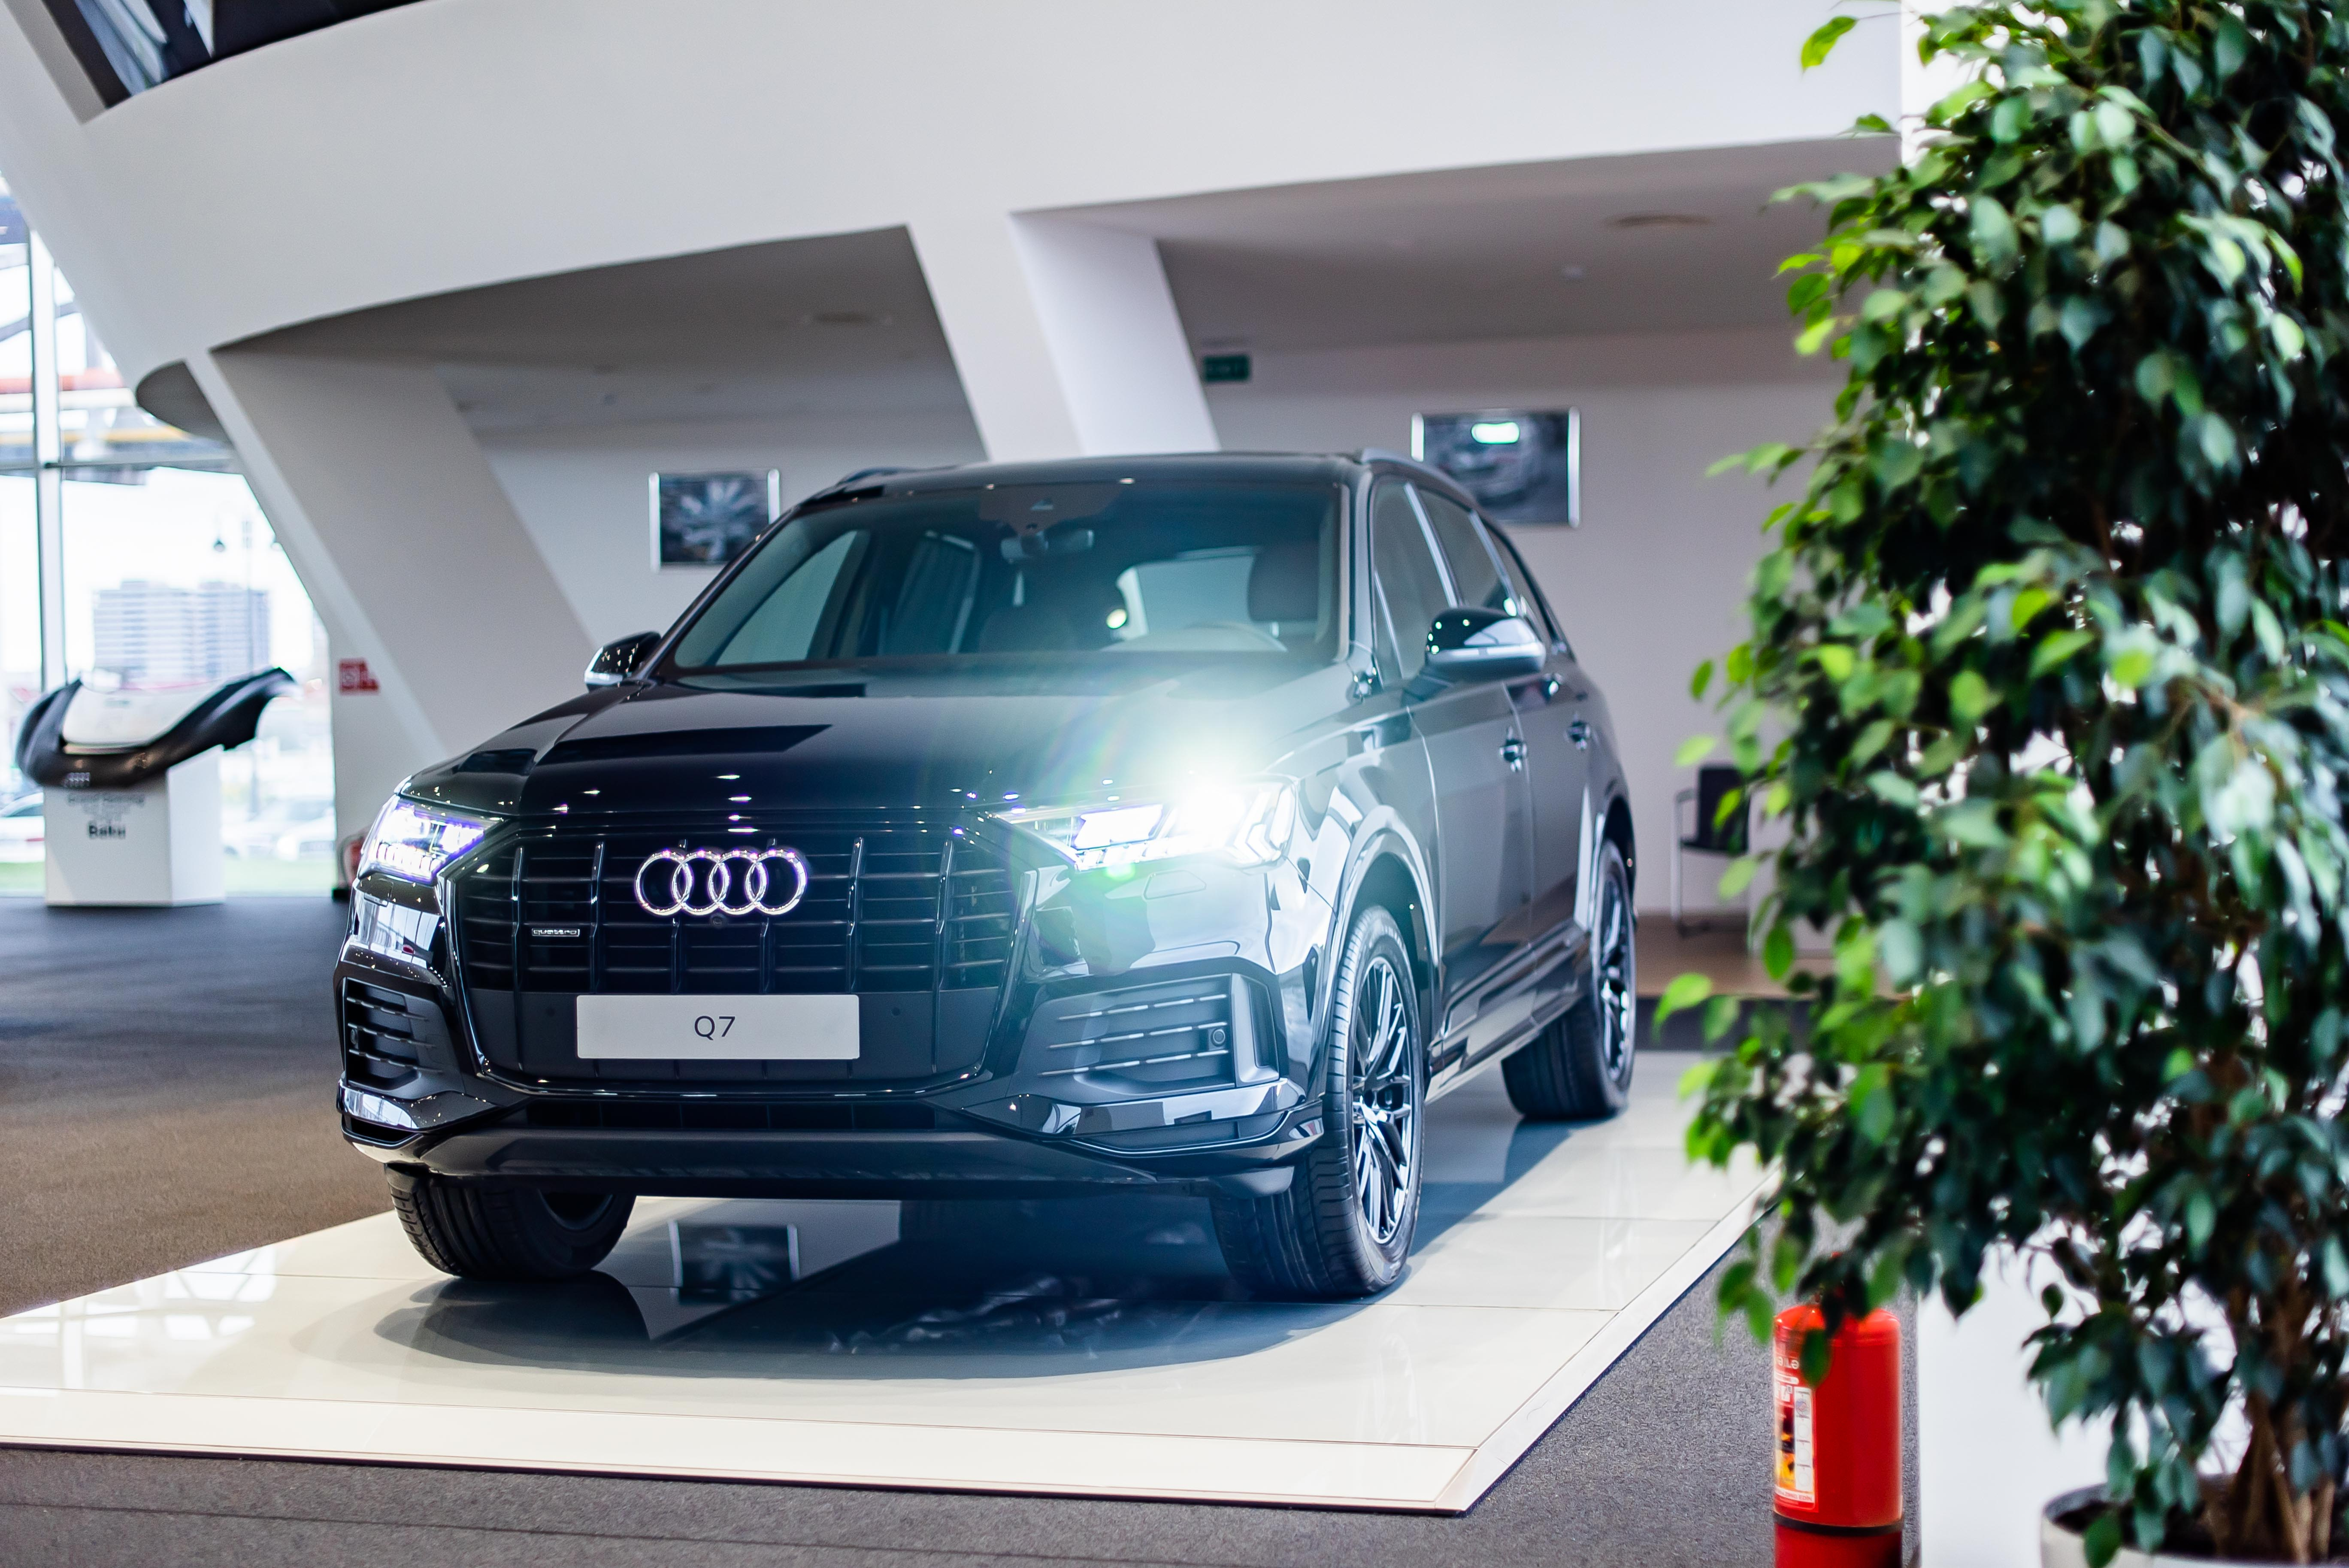 2020 model “Audi Q7” artıq Azərbaycanda - FOTO/VİDEO